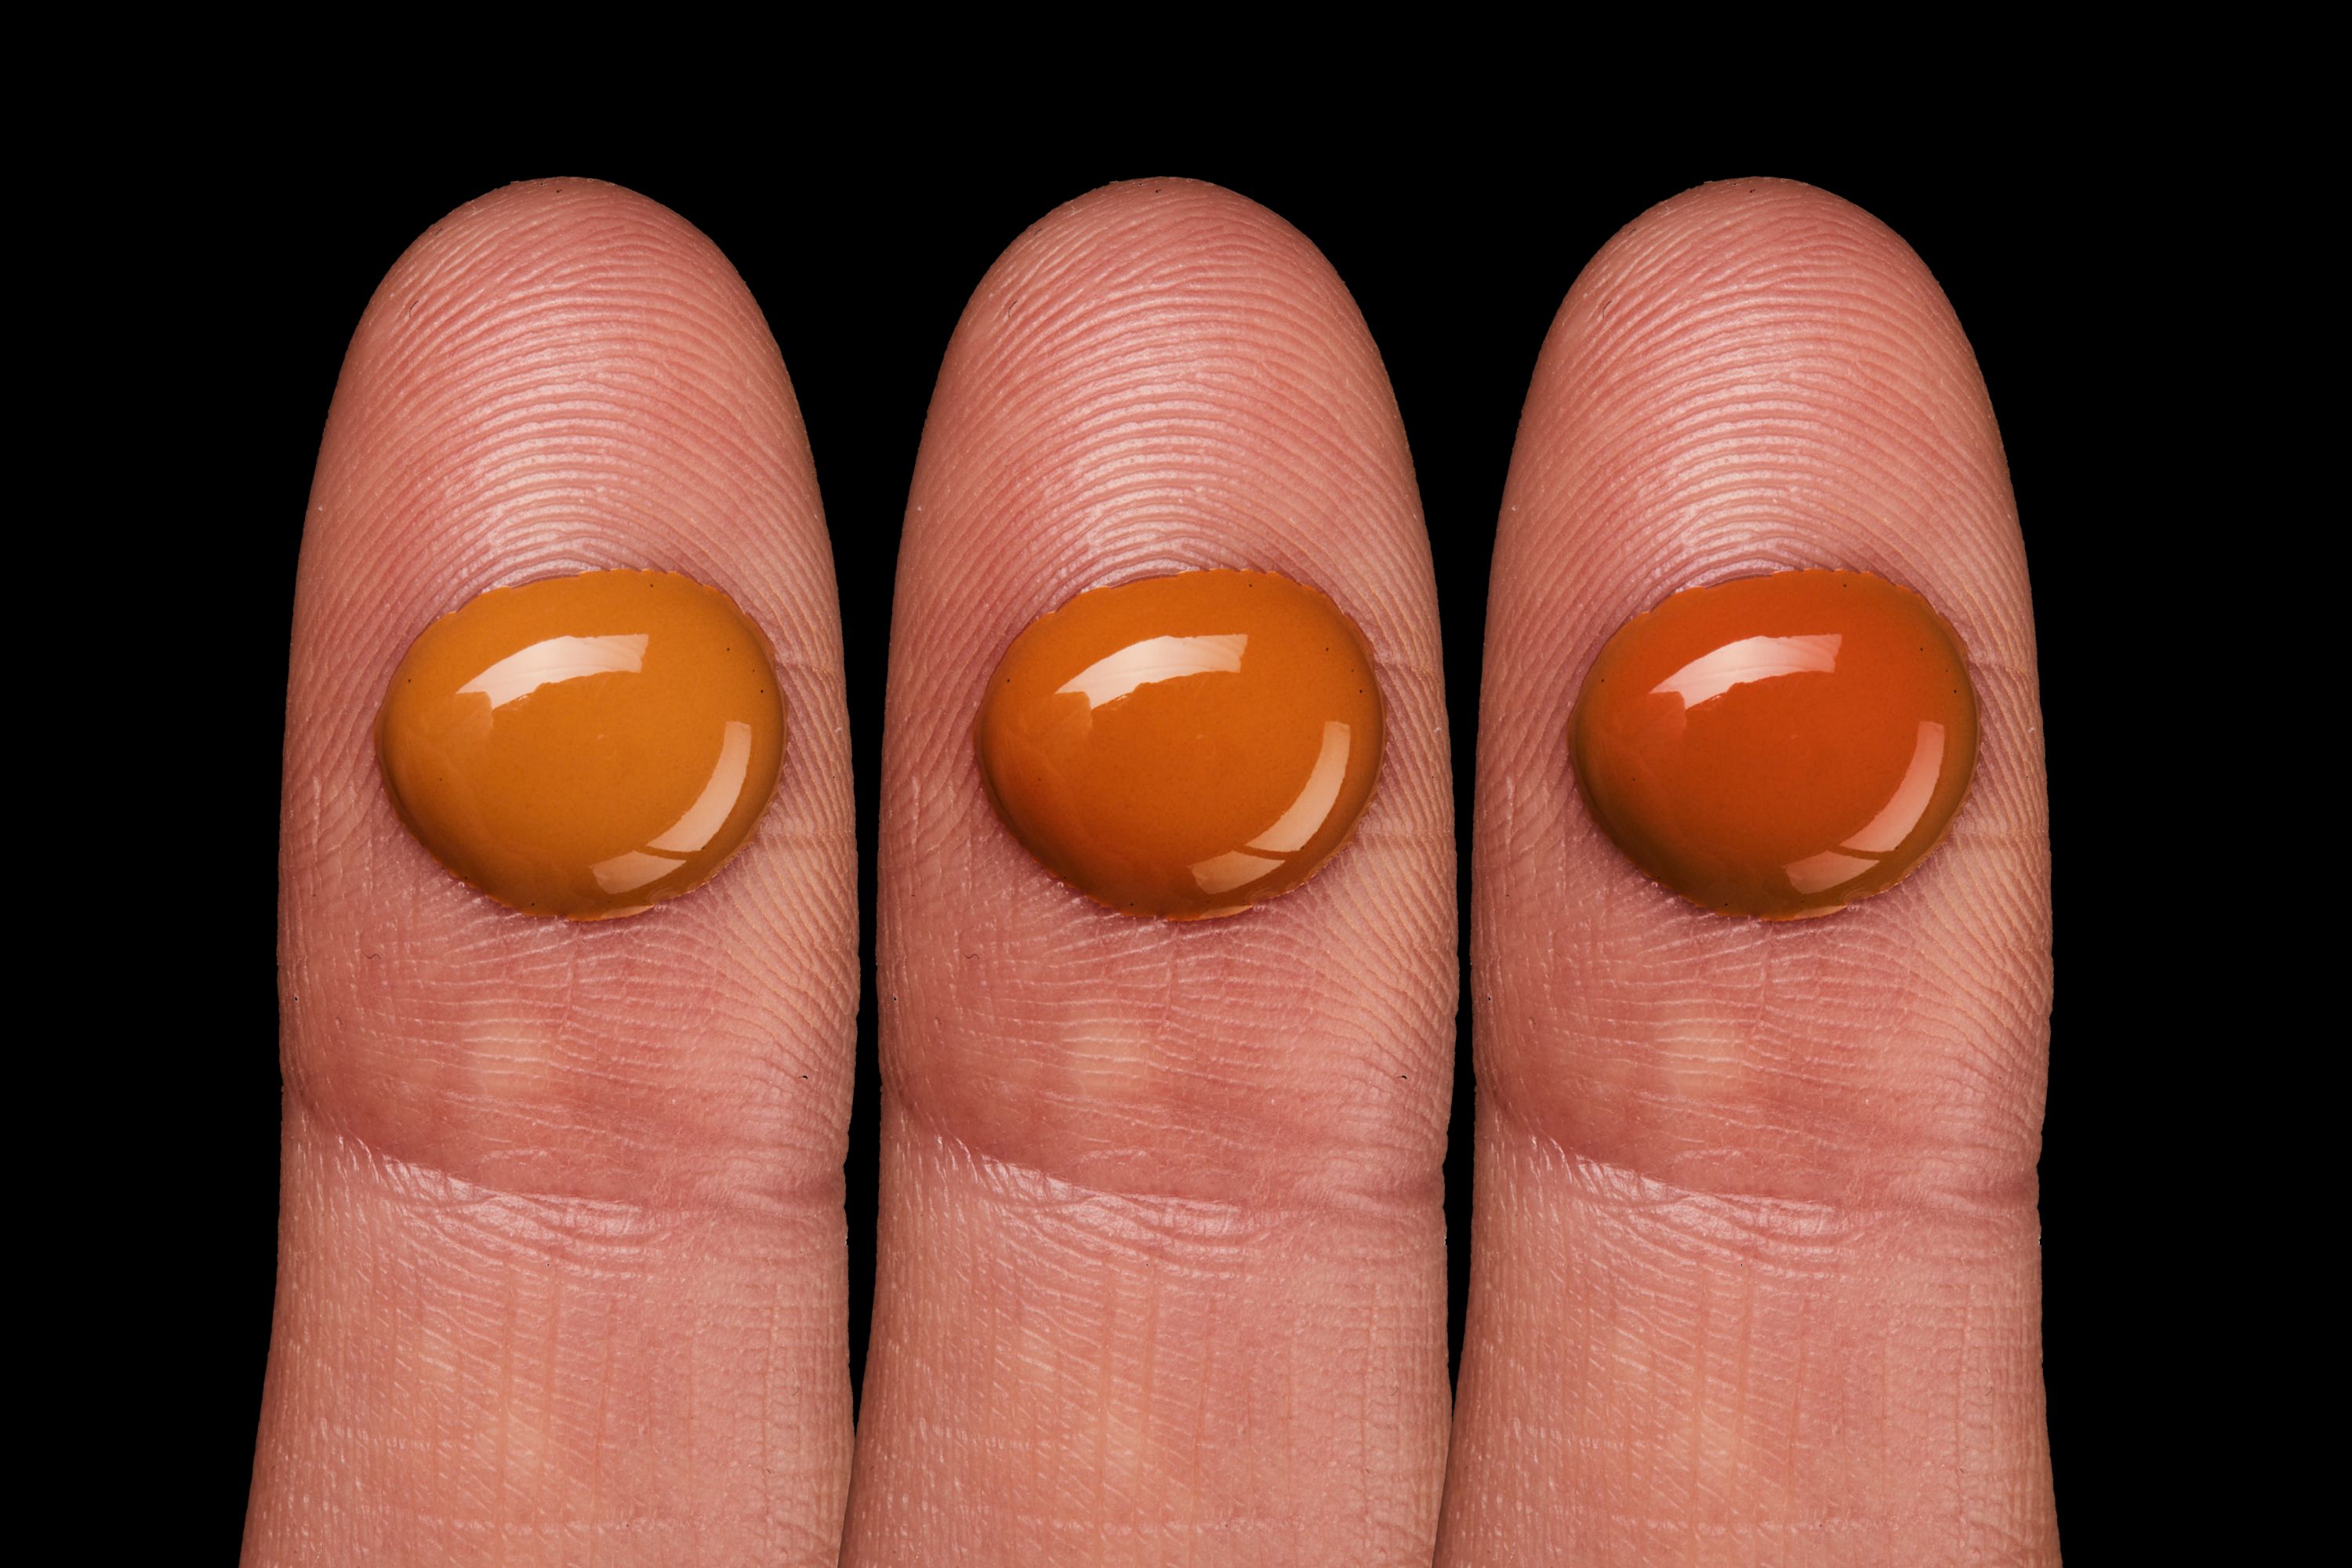 Finger Hands Light Skin Tone - Set of 10